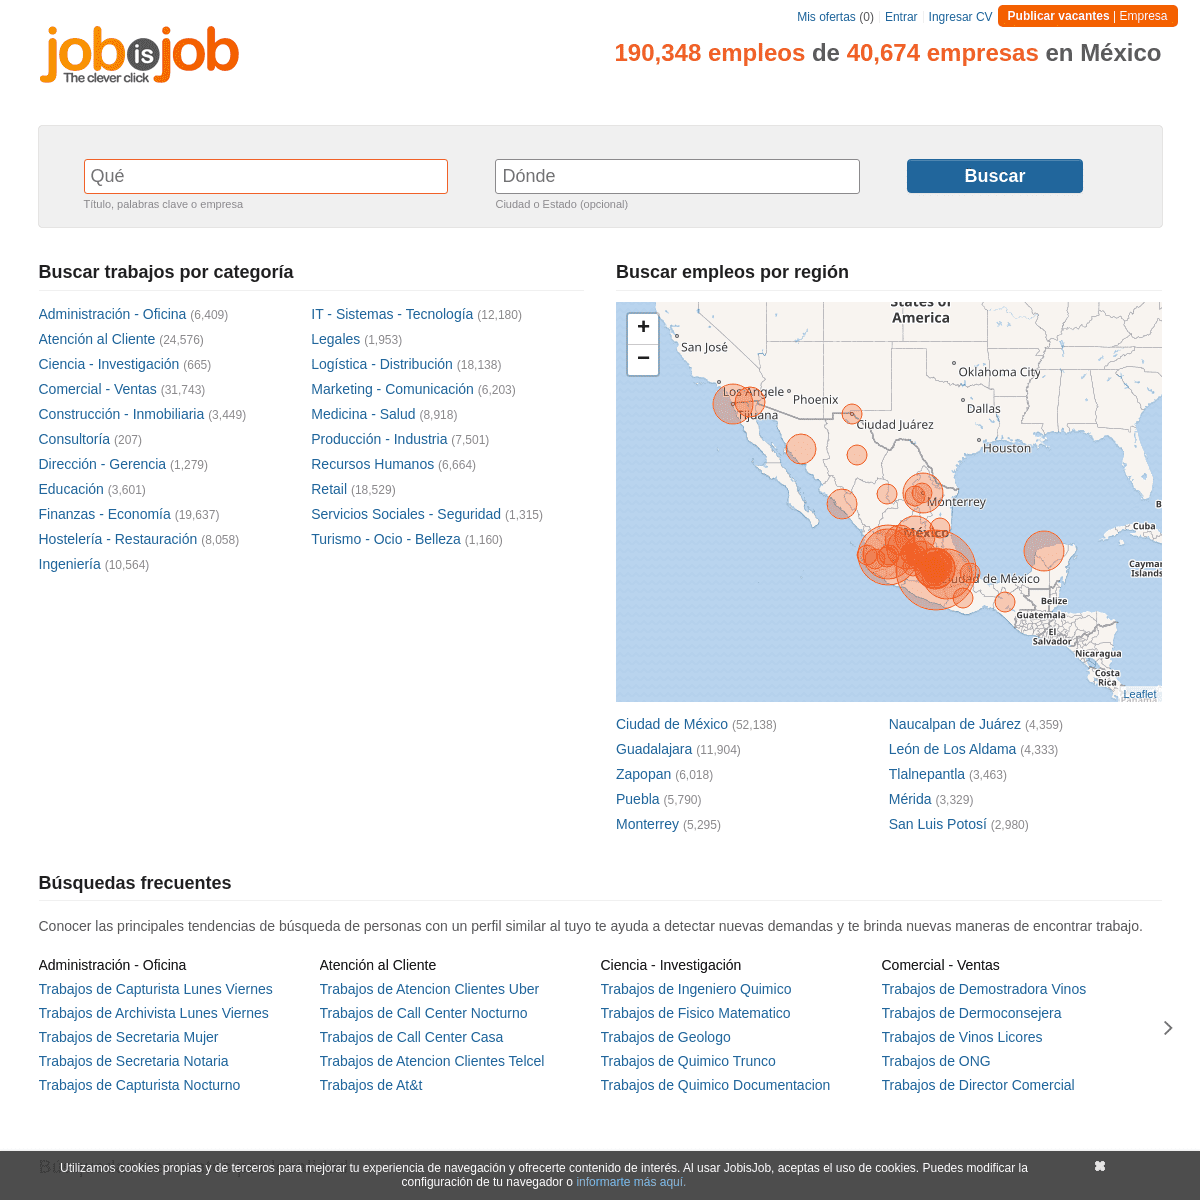 A complete backup of jobisjob.com.mx